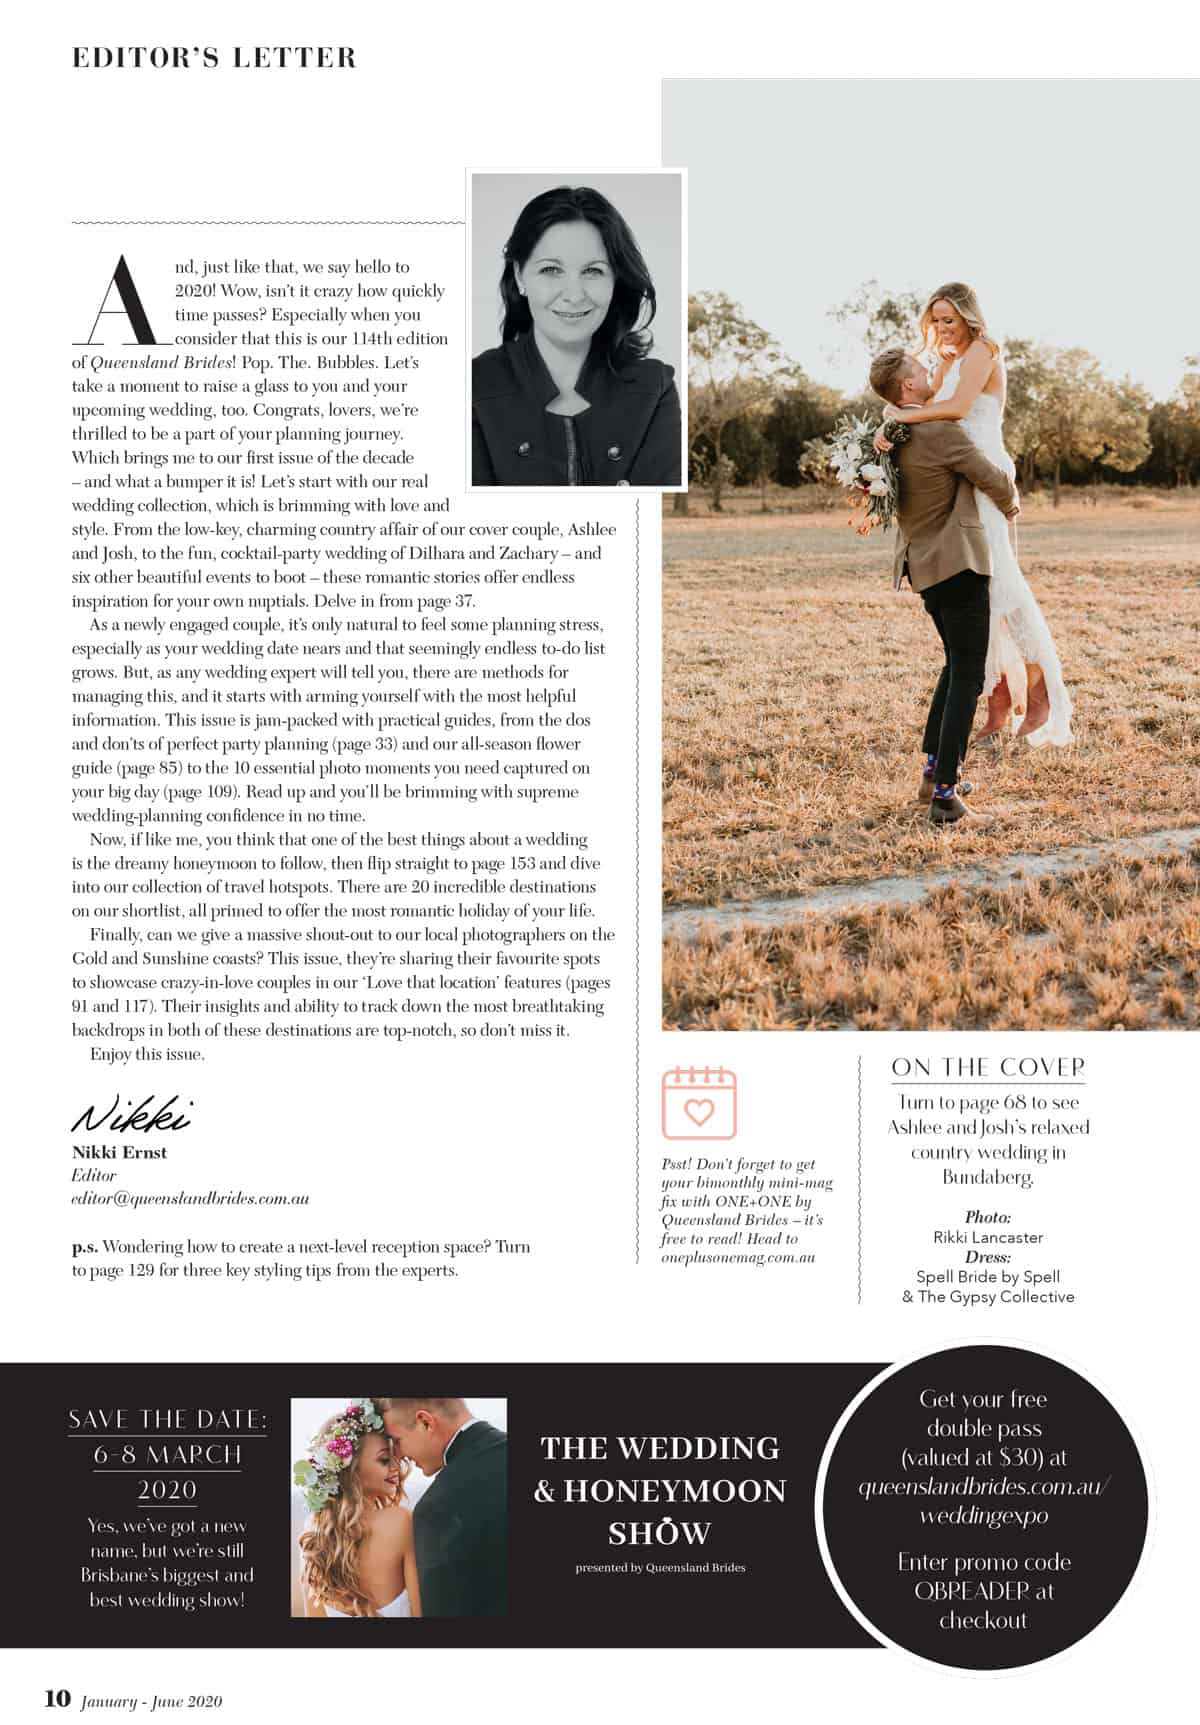 2020 edition of Queensland Brides magazine